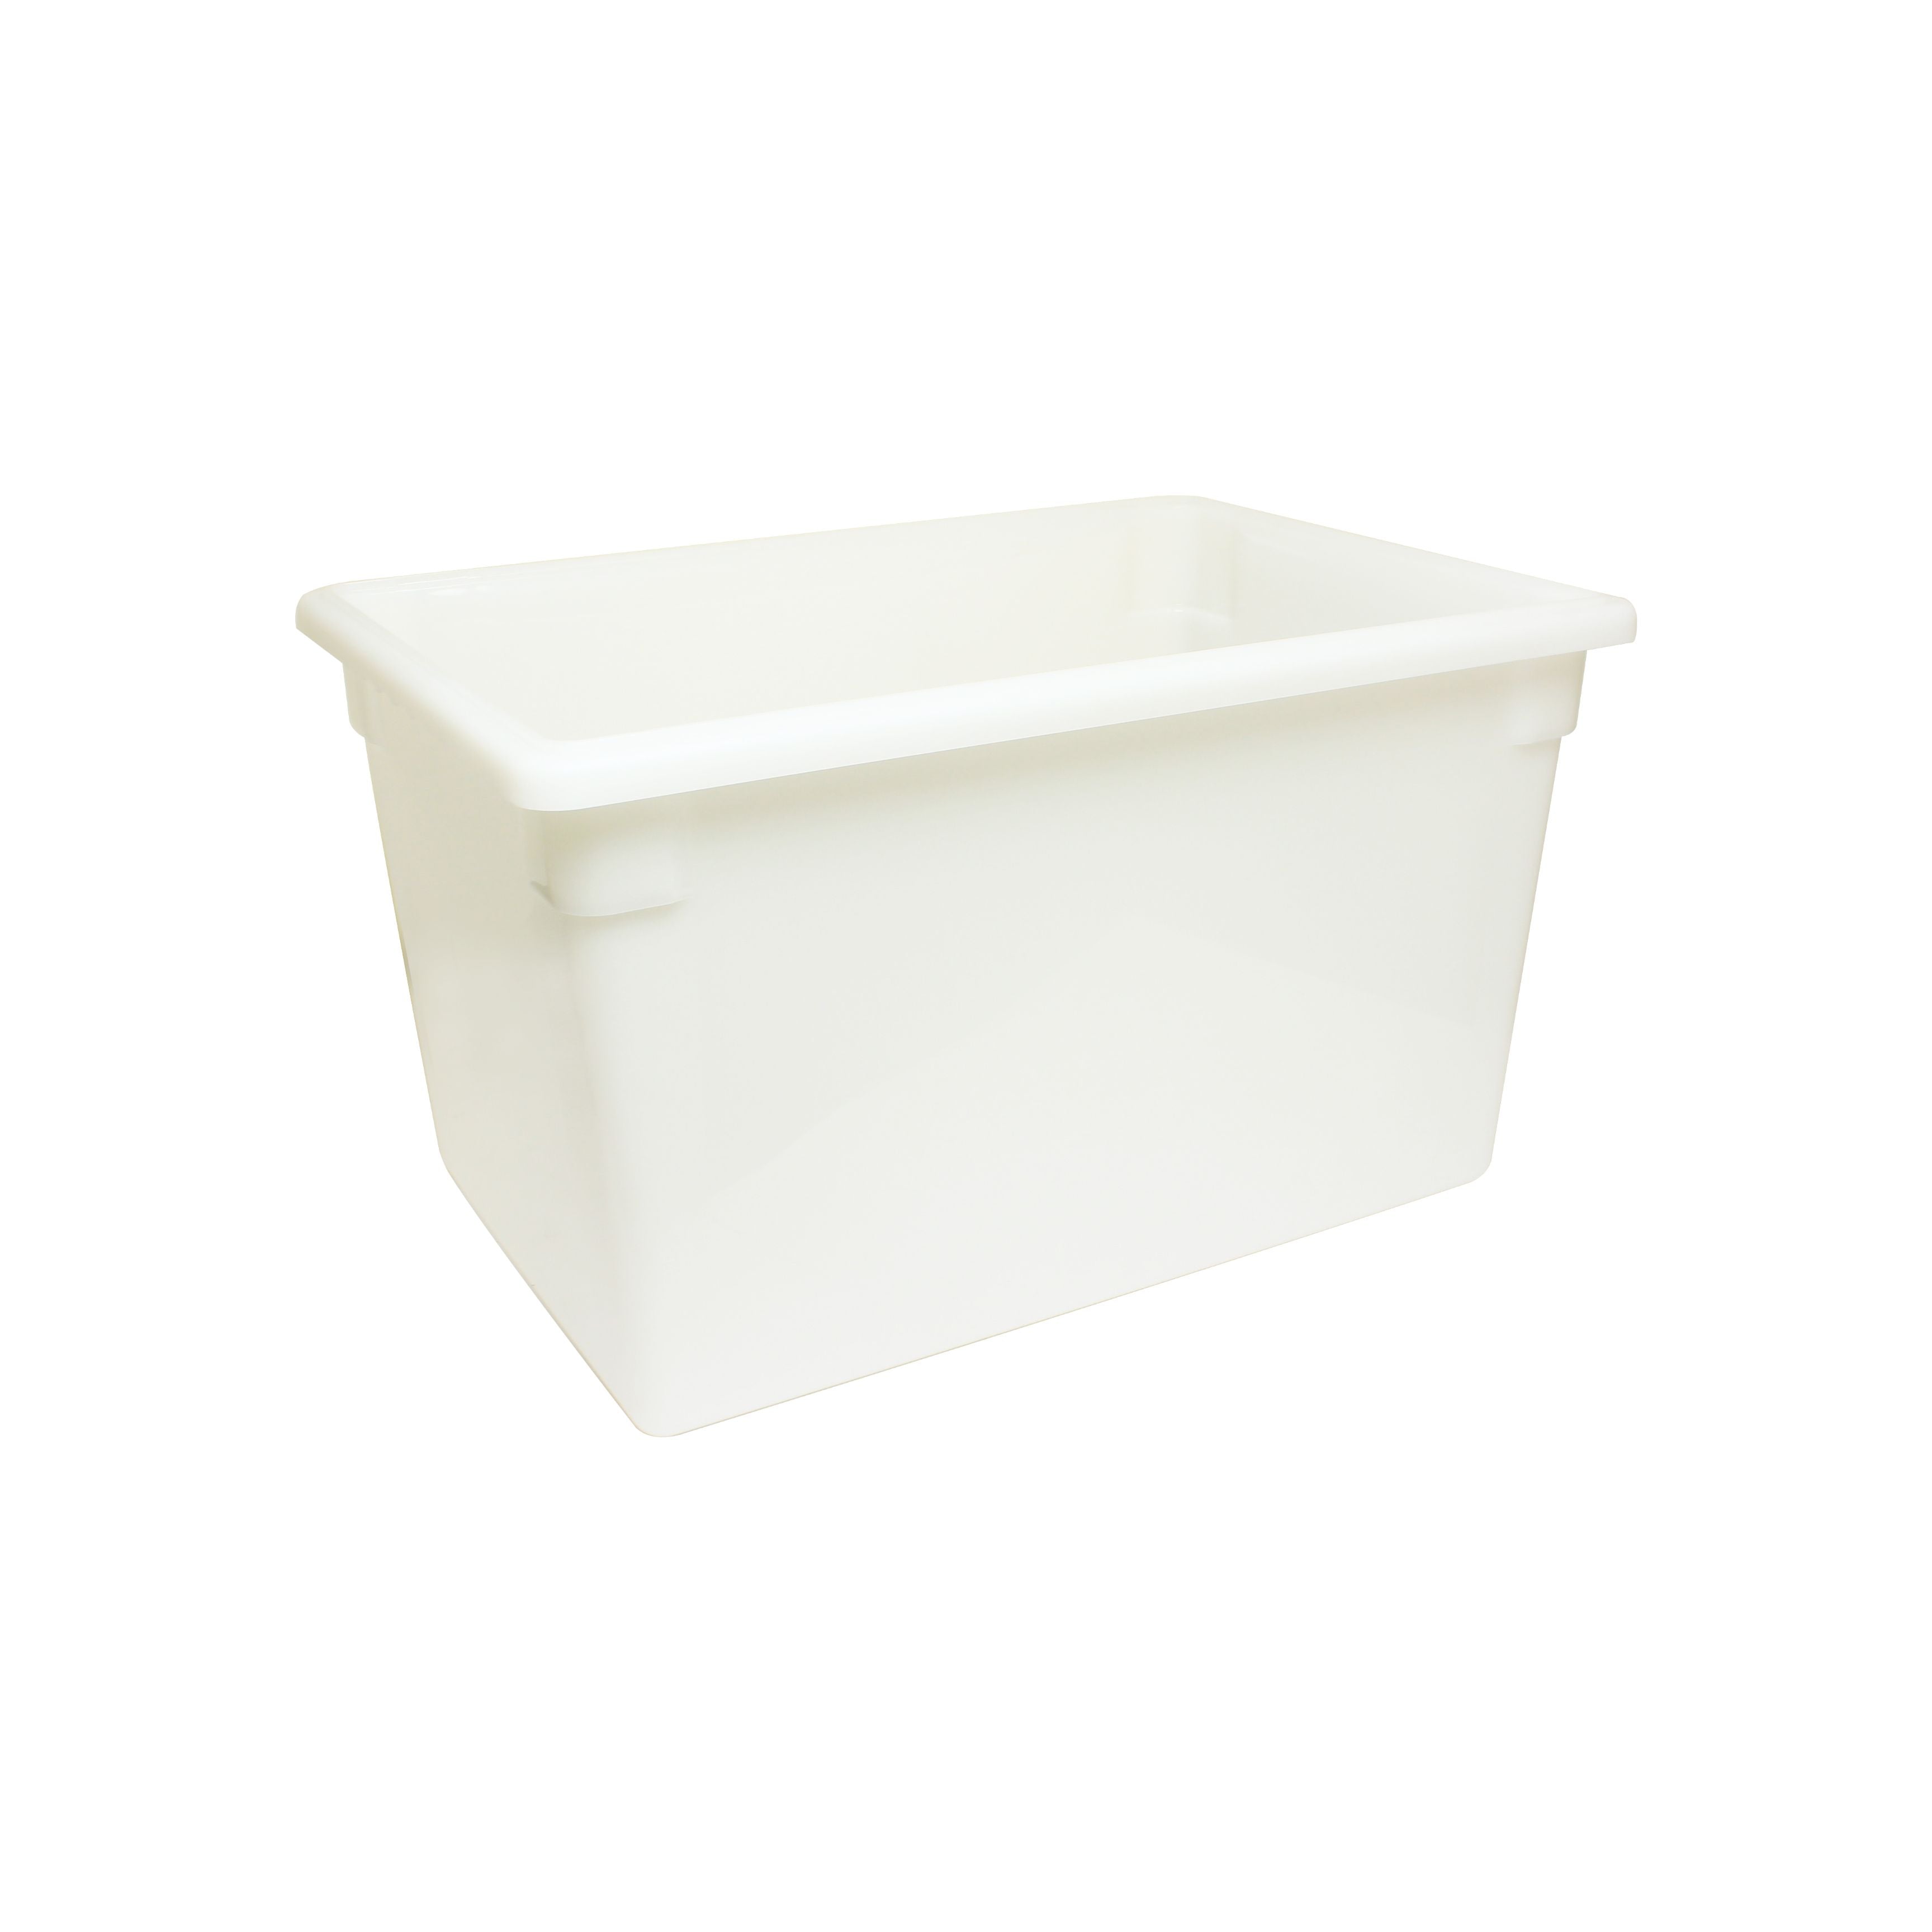 Thunder Group PLFB182615PP 18" x 26" x 15" White Polypropylene Food Storage Box